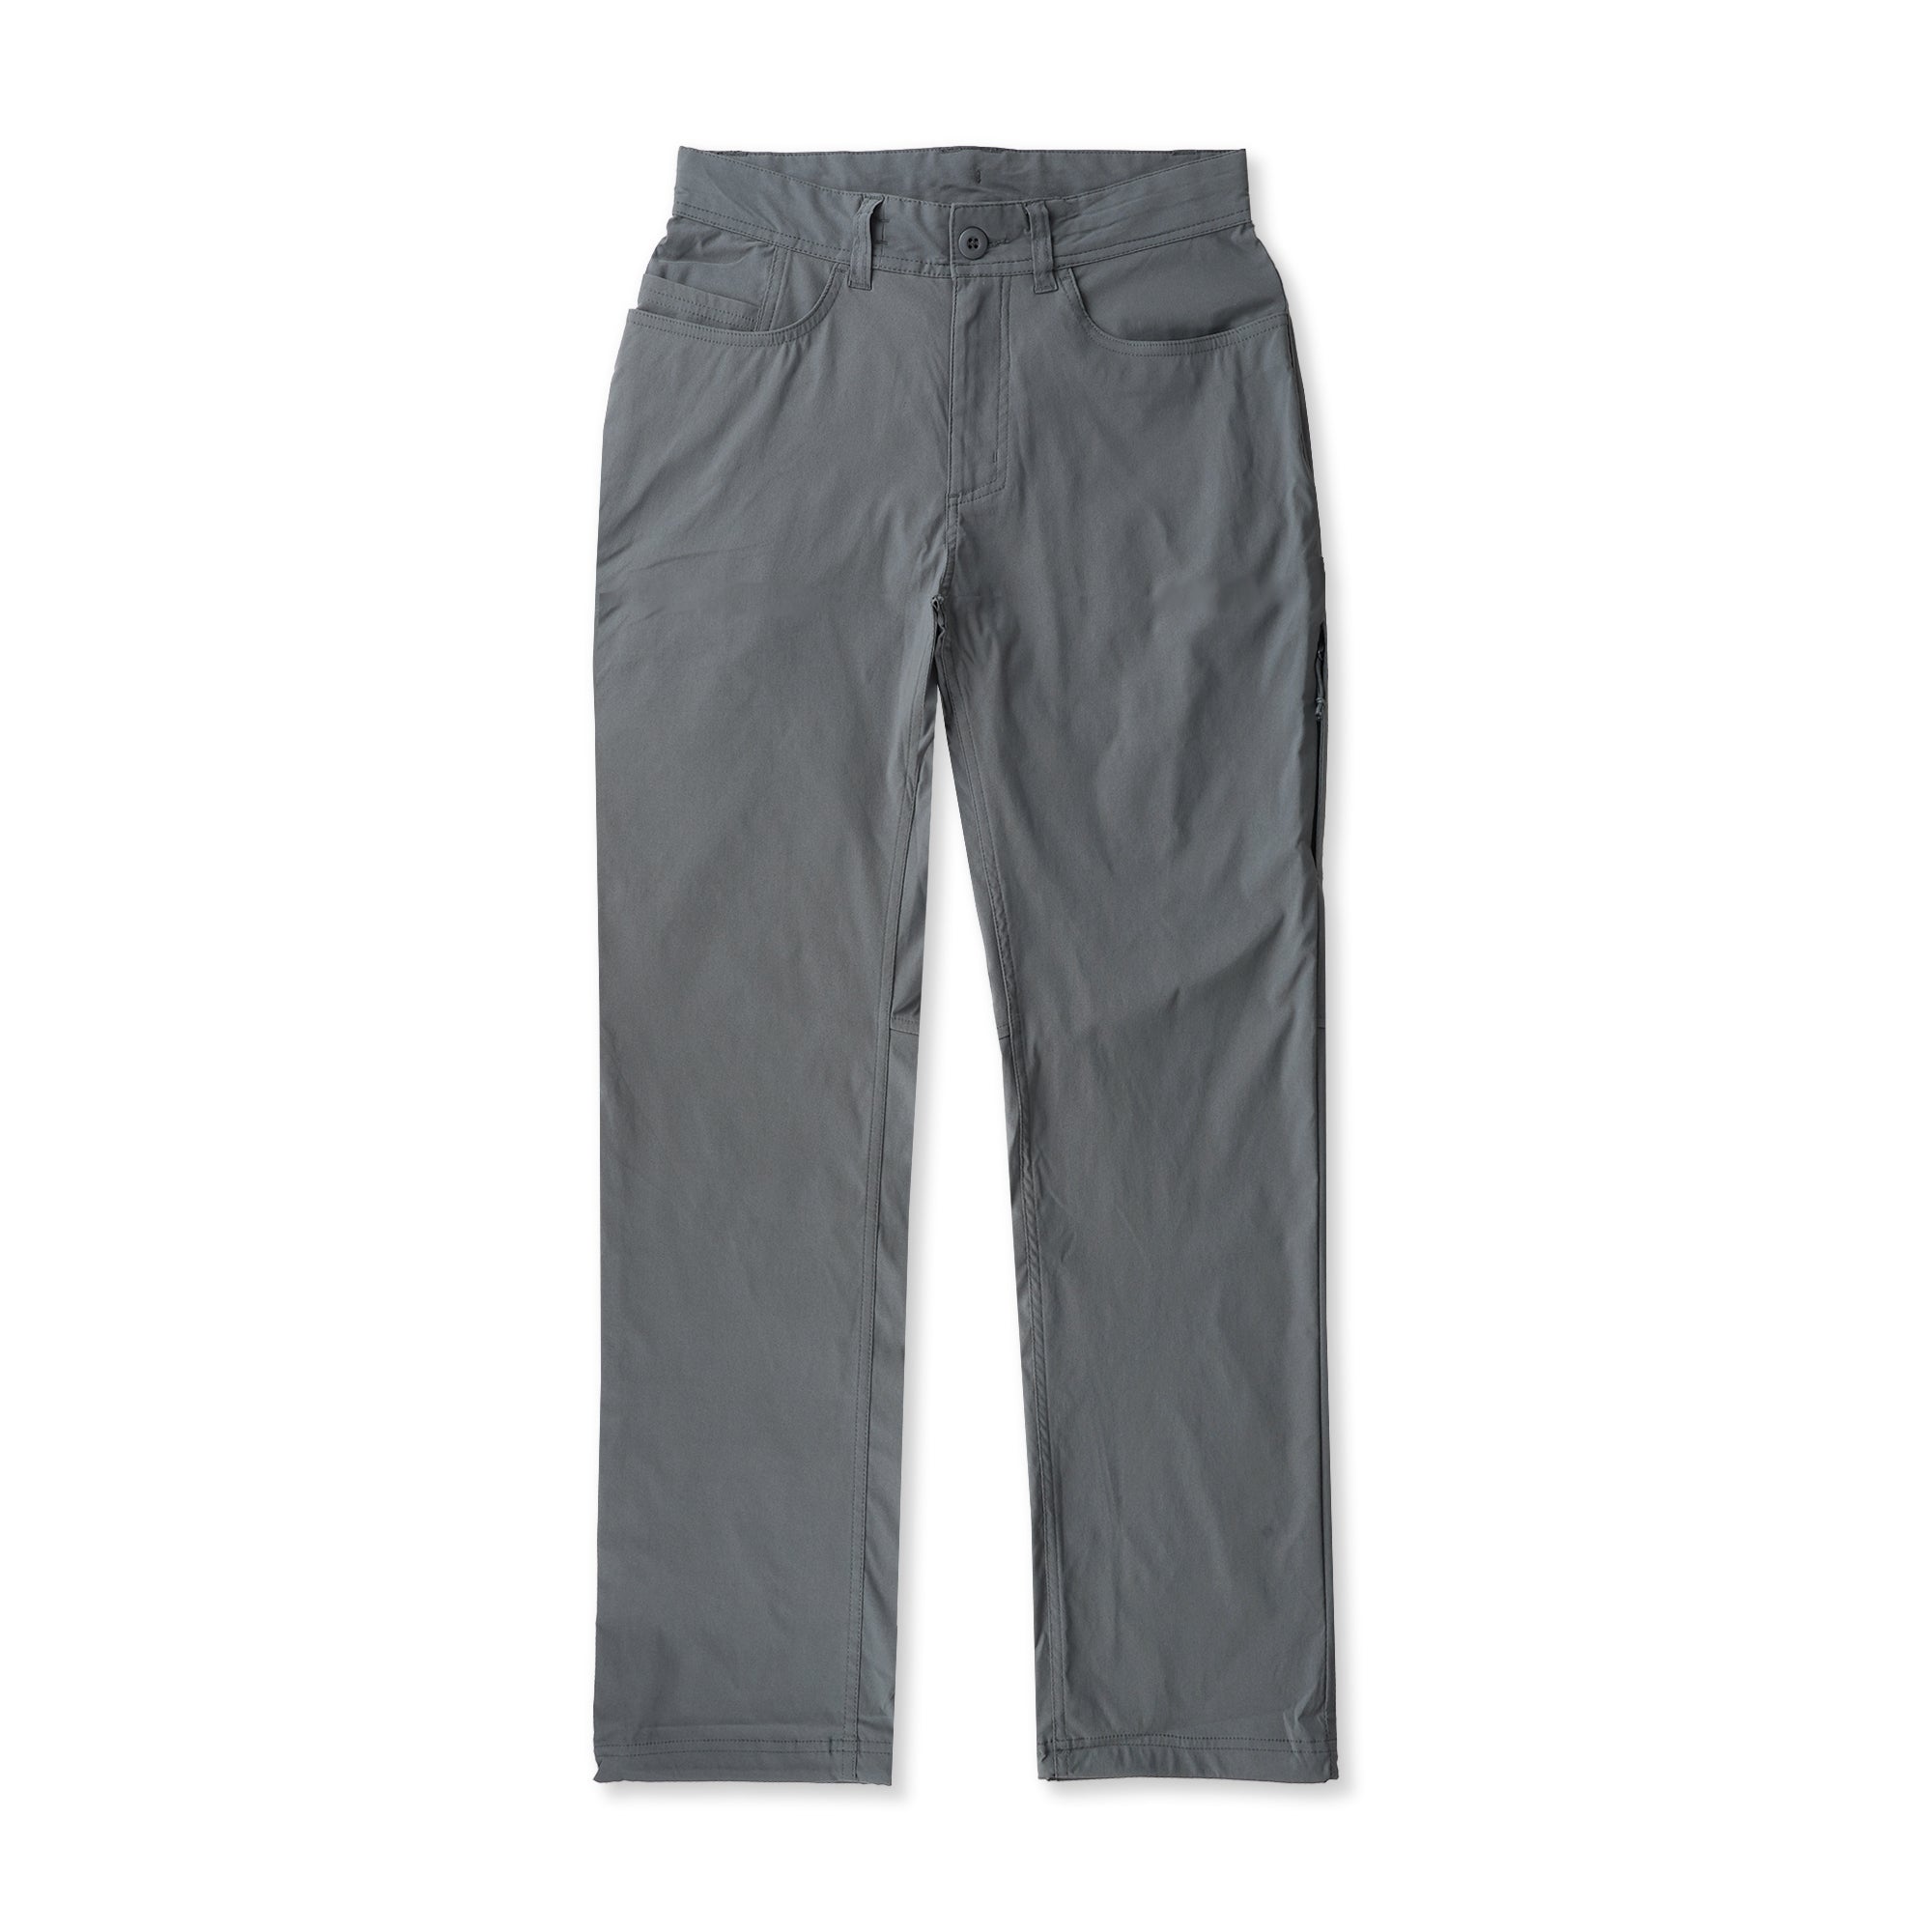 AFTCO Men's Honcho Stretch Utility Pants - Charcoal - 38